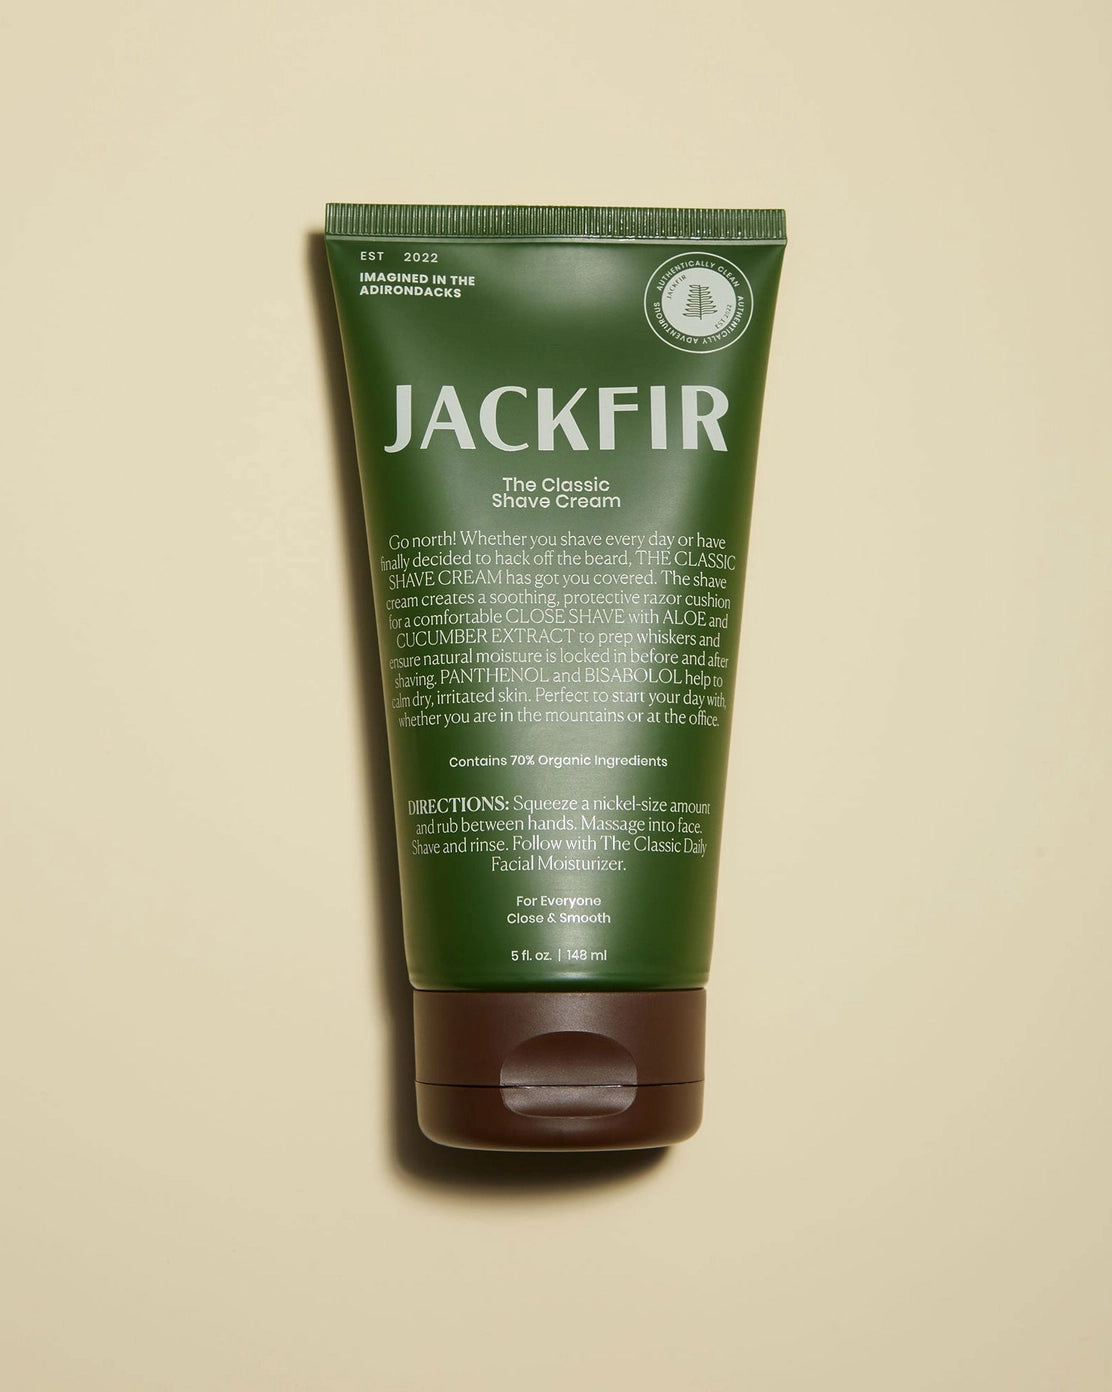 Jackfir The Classic Shave Cream